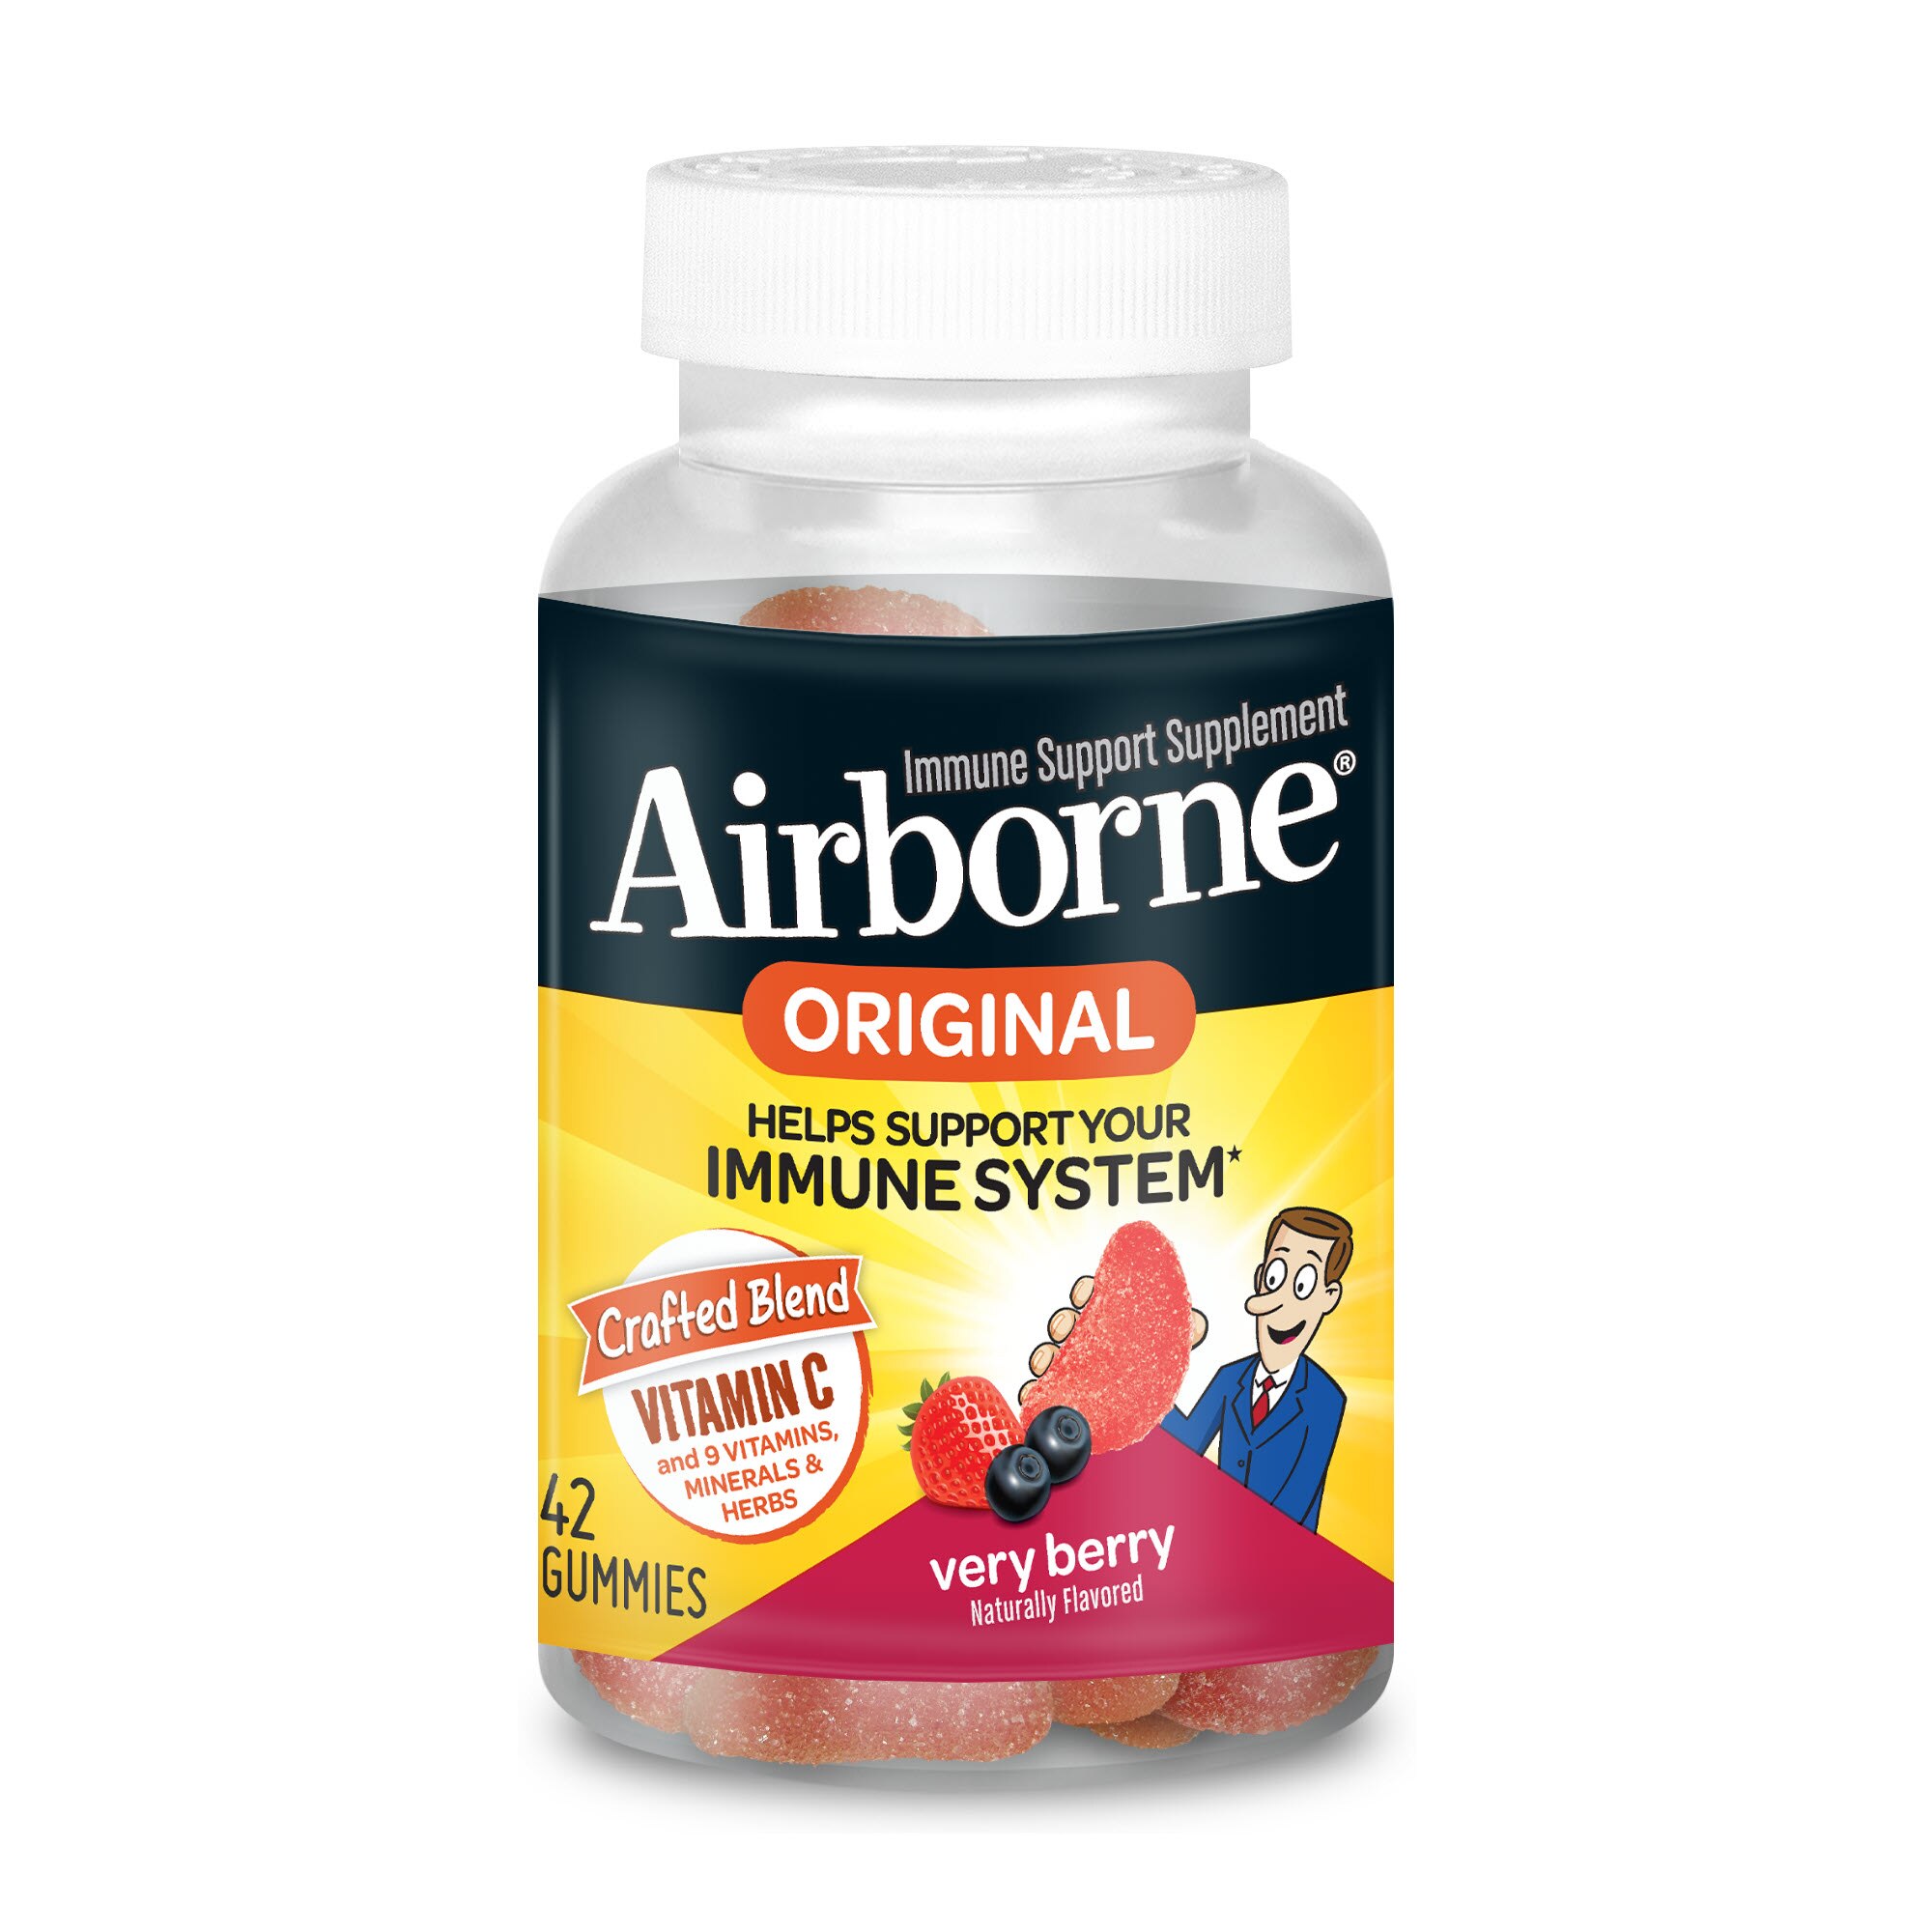 Airborne Immune Support Vitamin C Gummies, Very Berry Flavor, 42 CT